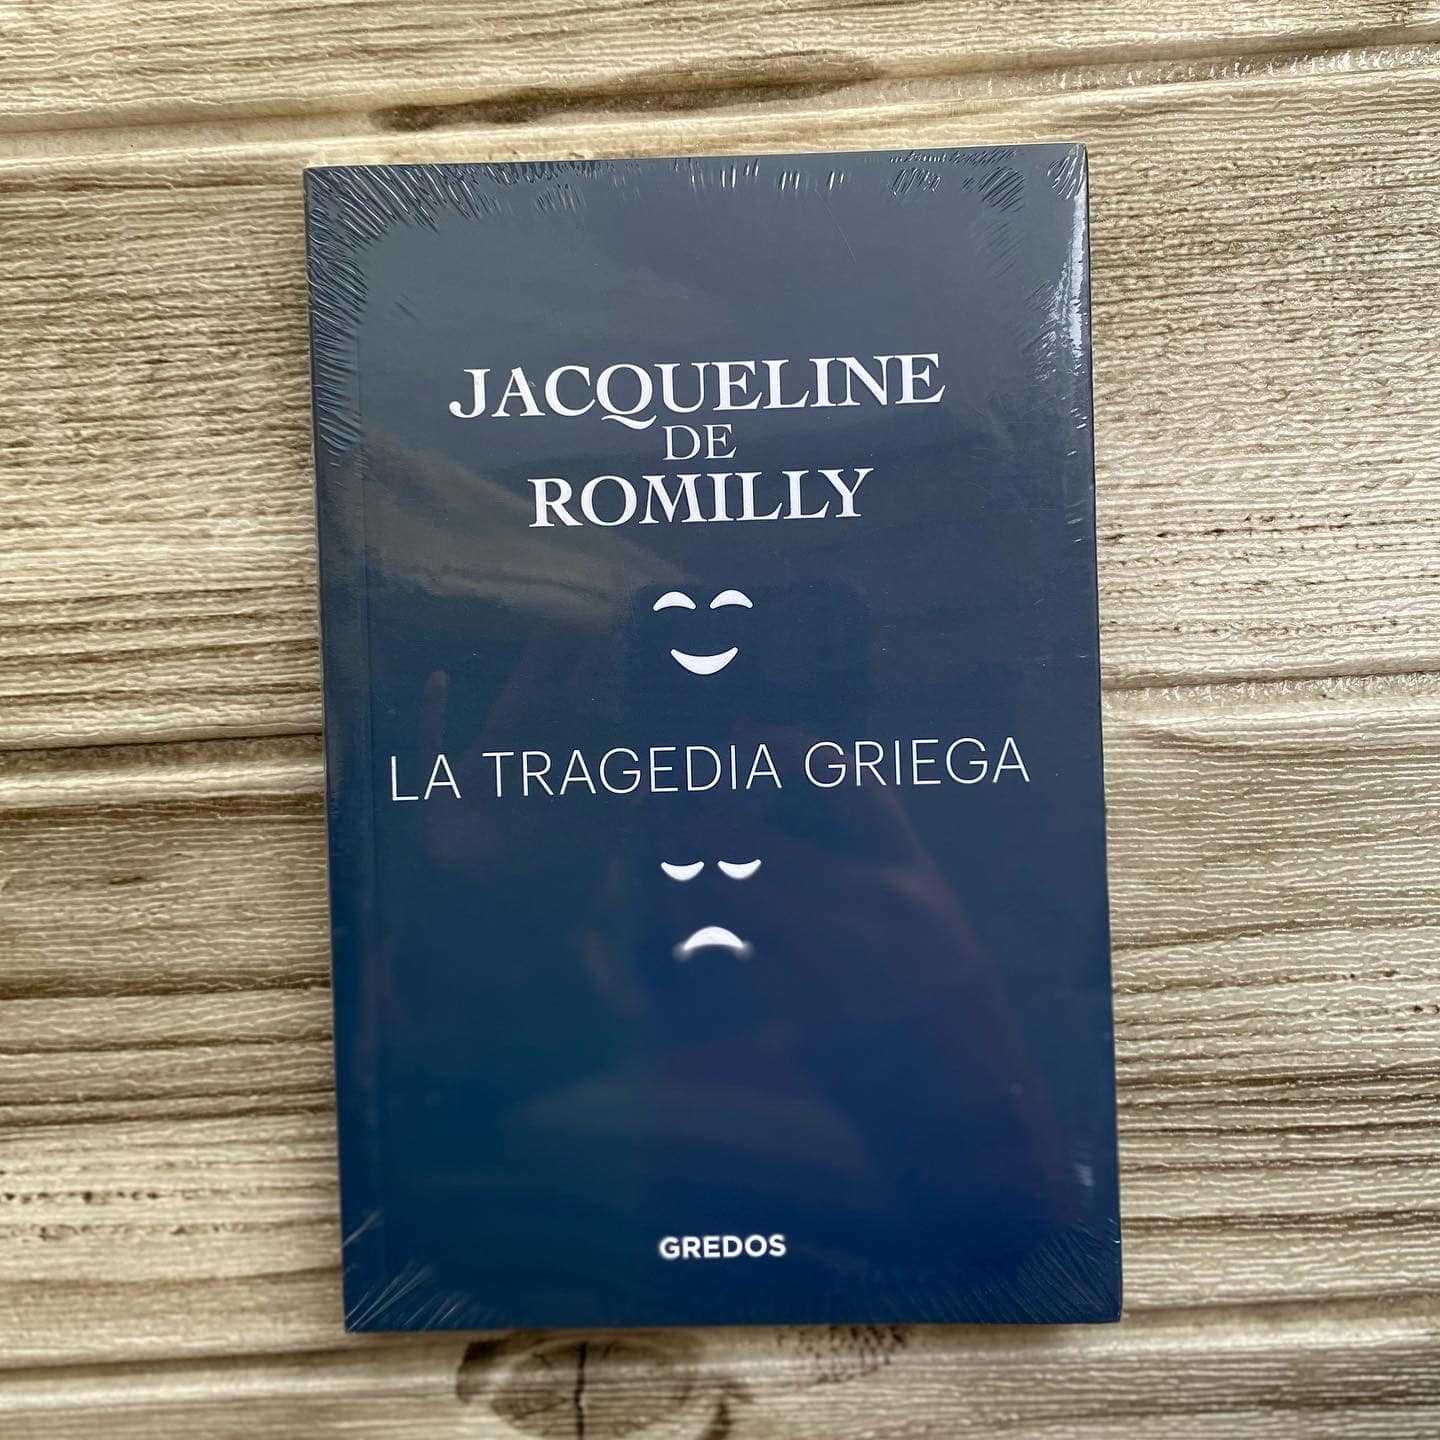 📚La tragedia griega - Jacqueline de Romilly